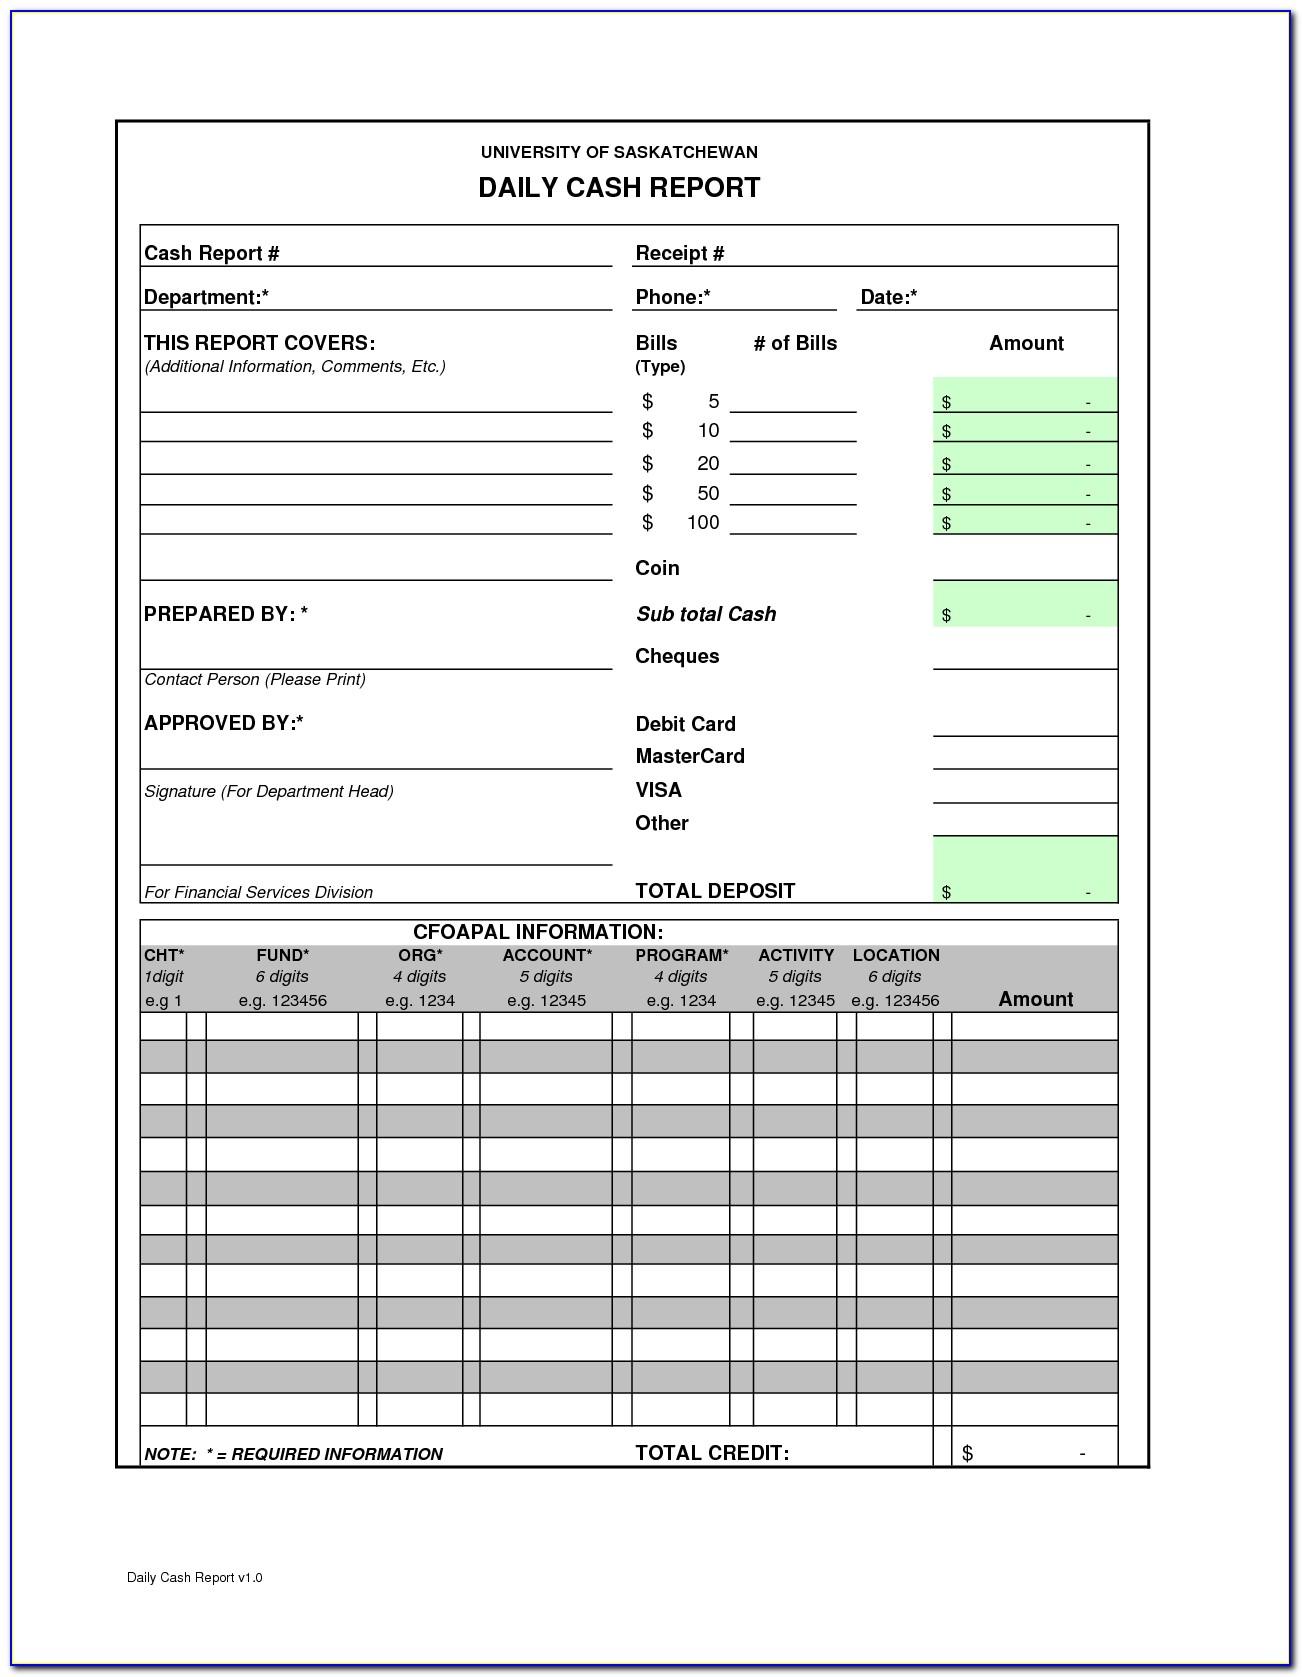 Daily Cash Register Balance Sheet Template Excel